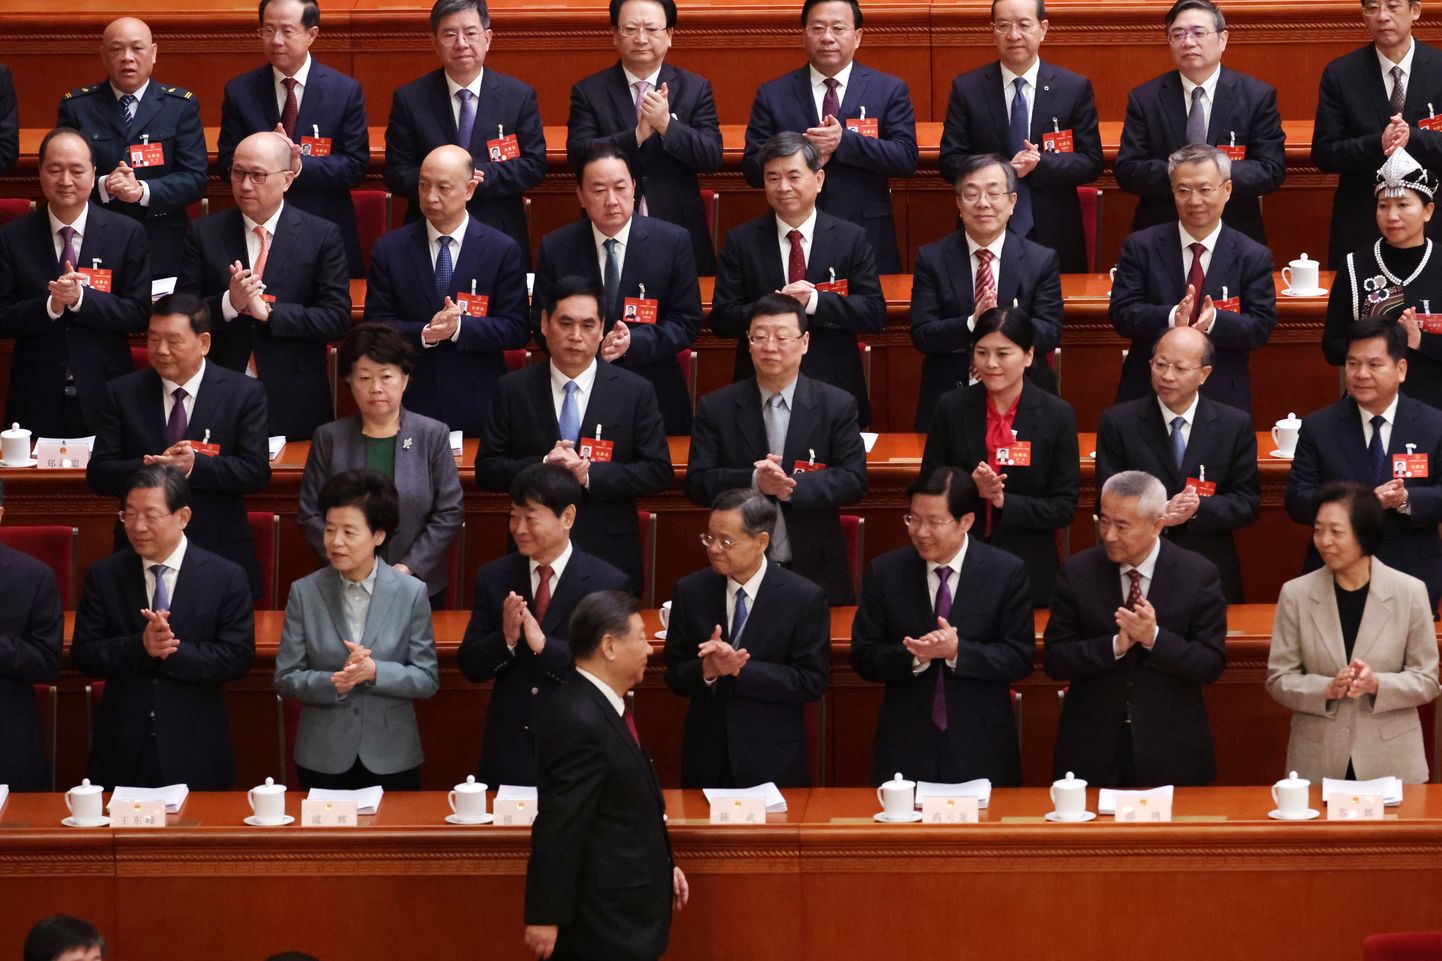 Hiina president Xi Jinping saabumas parlamendi istungjärgule.